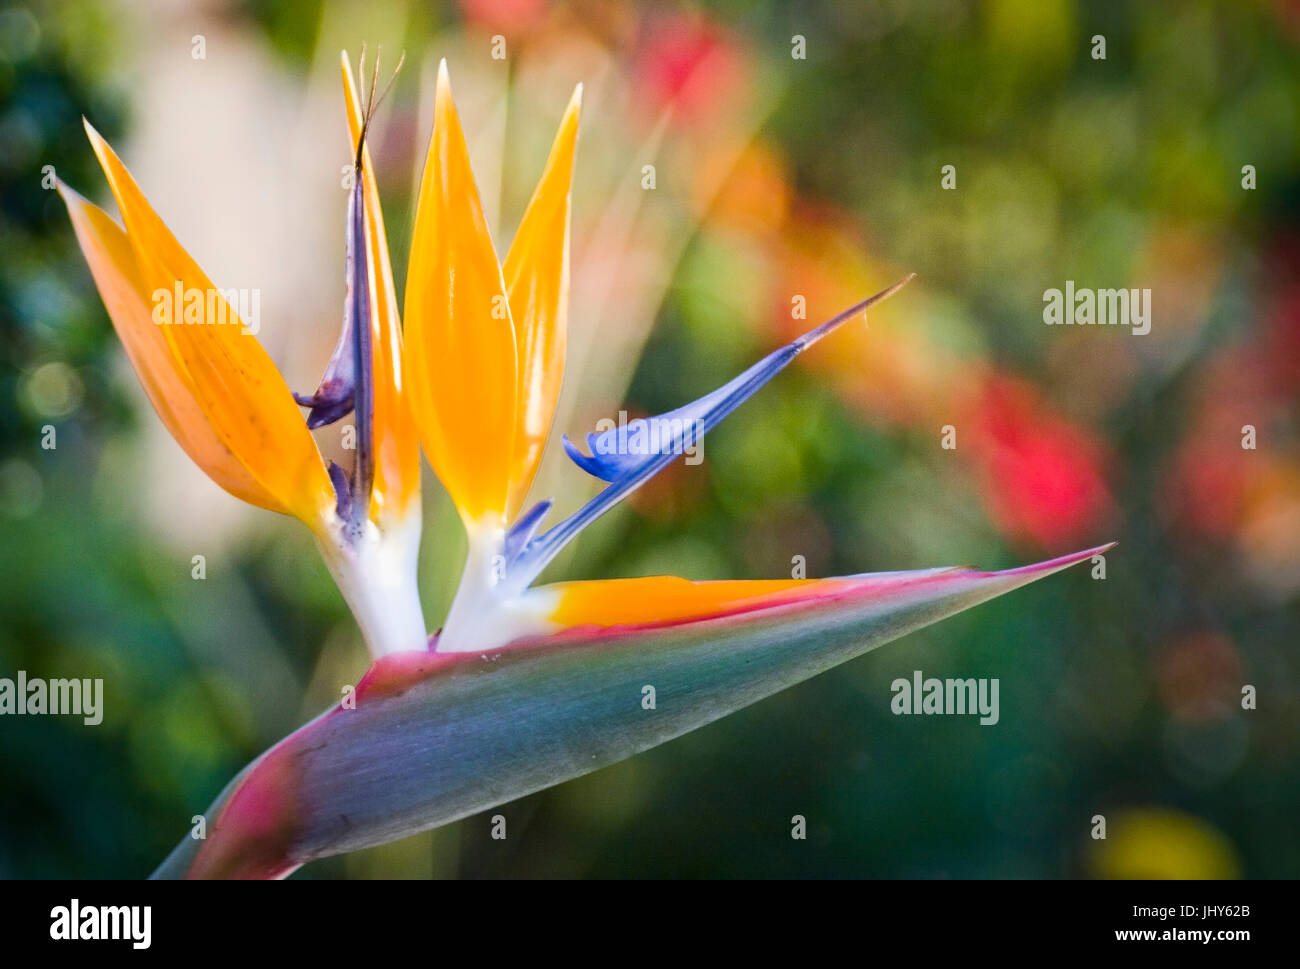 Strelitzie, bird's of paradise flower, Madeira, Portugal - Bird-of-paradise flower, Madeira, Potrugal, Paradiesvogelblume Stock Photo